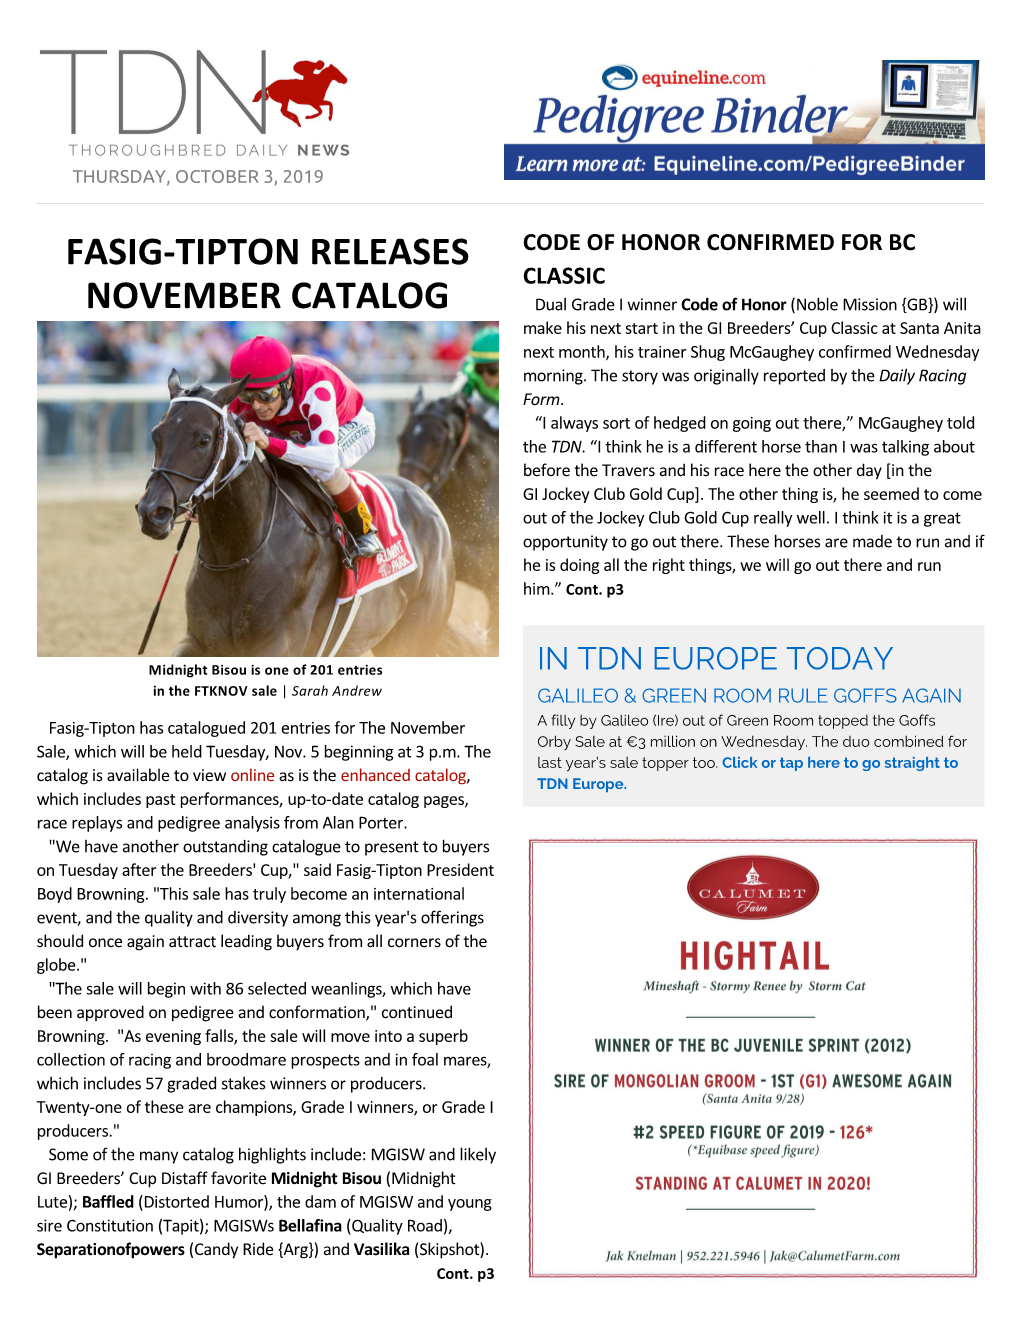 Fasig-Tipton Releases November Catalog